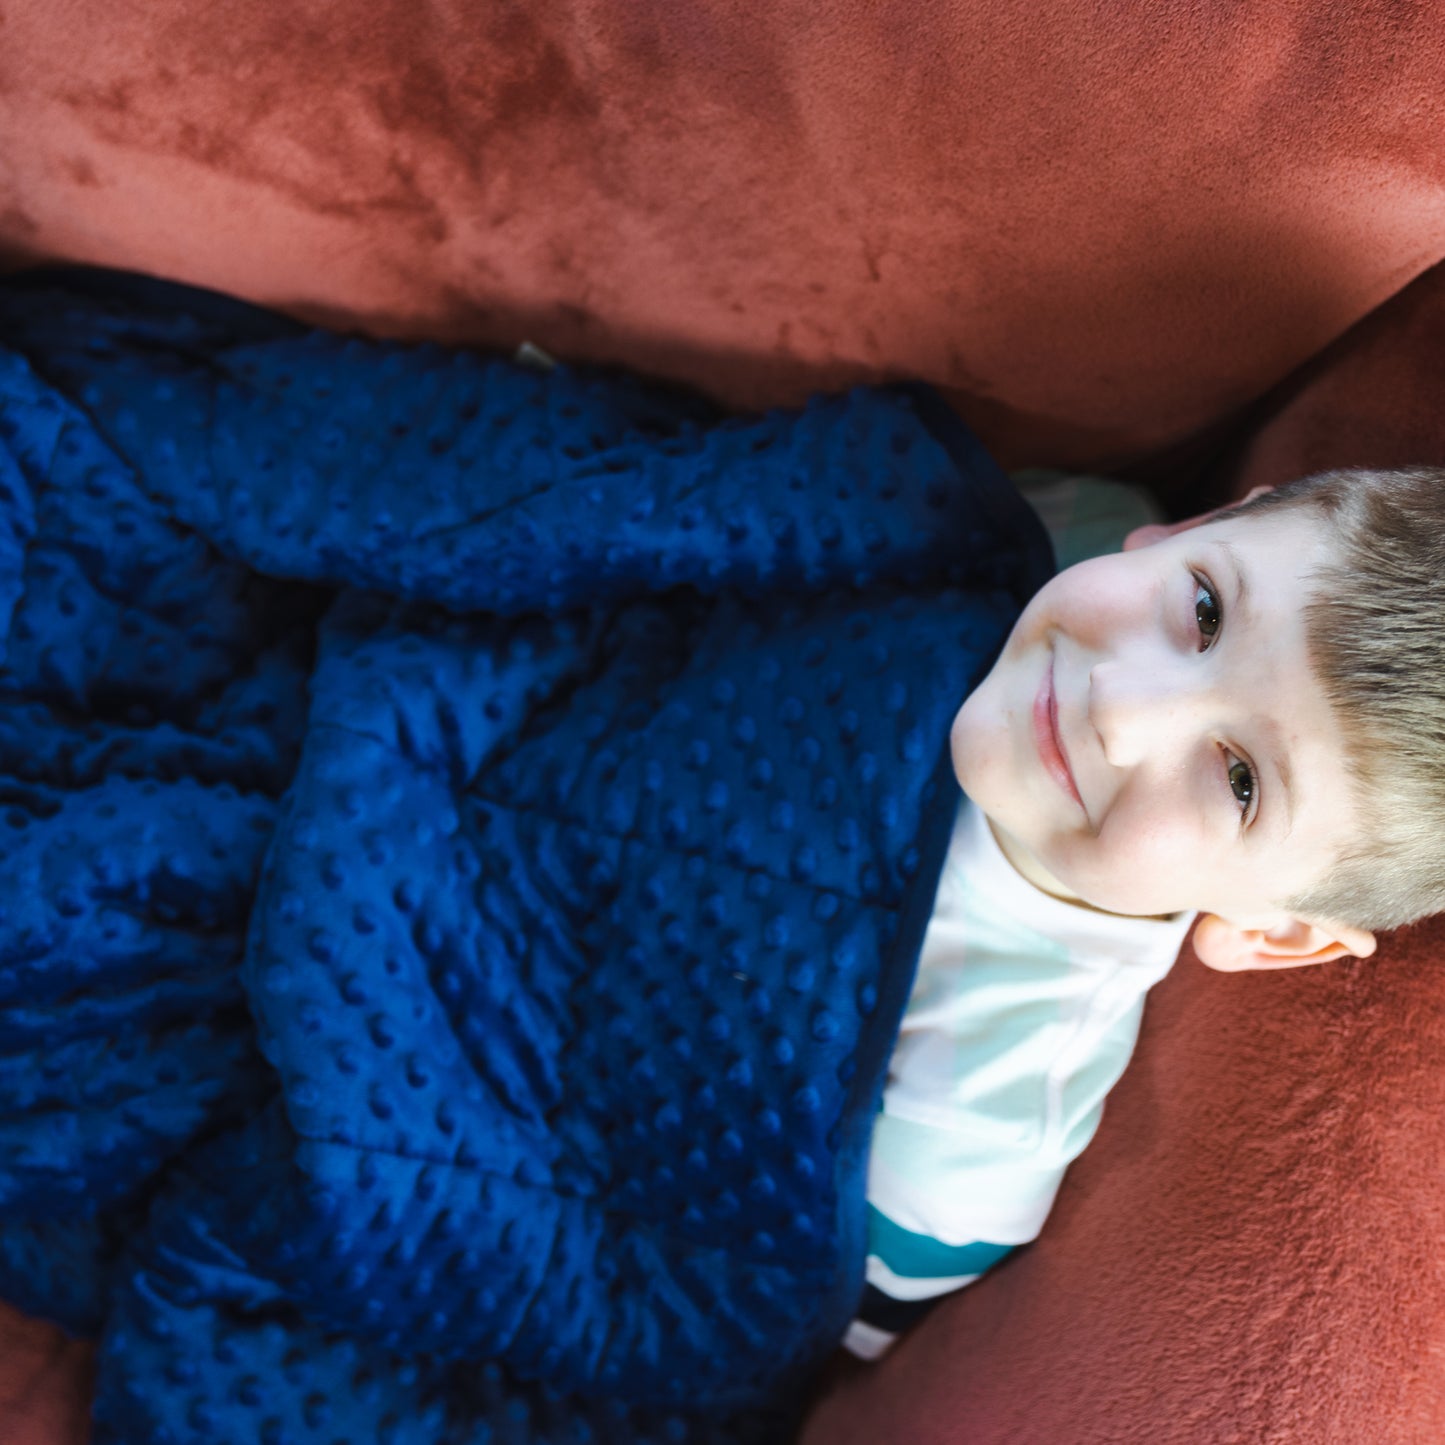 Bouncyband Kids' Sensory Weighted Blanket ‚Äì Soft Fleece, 7lb, 56" x 36"